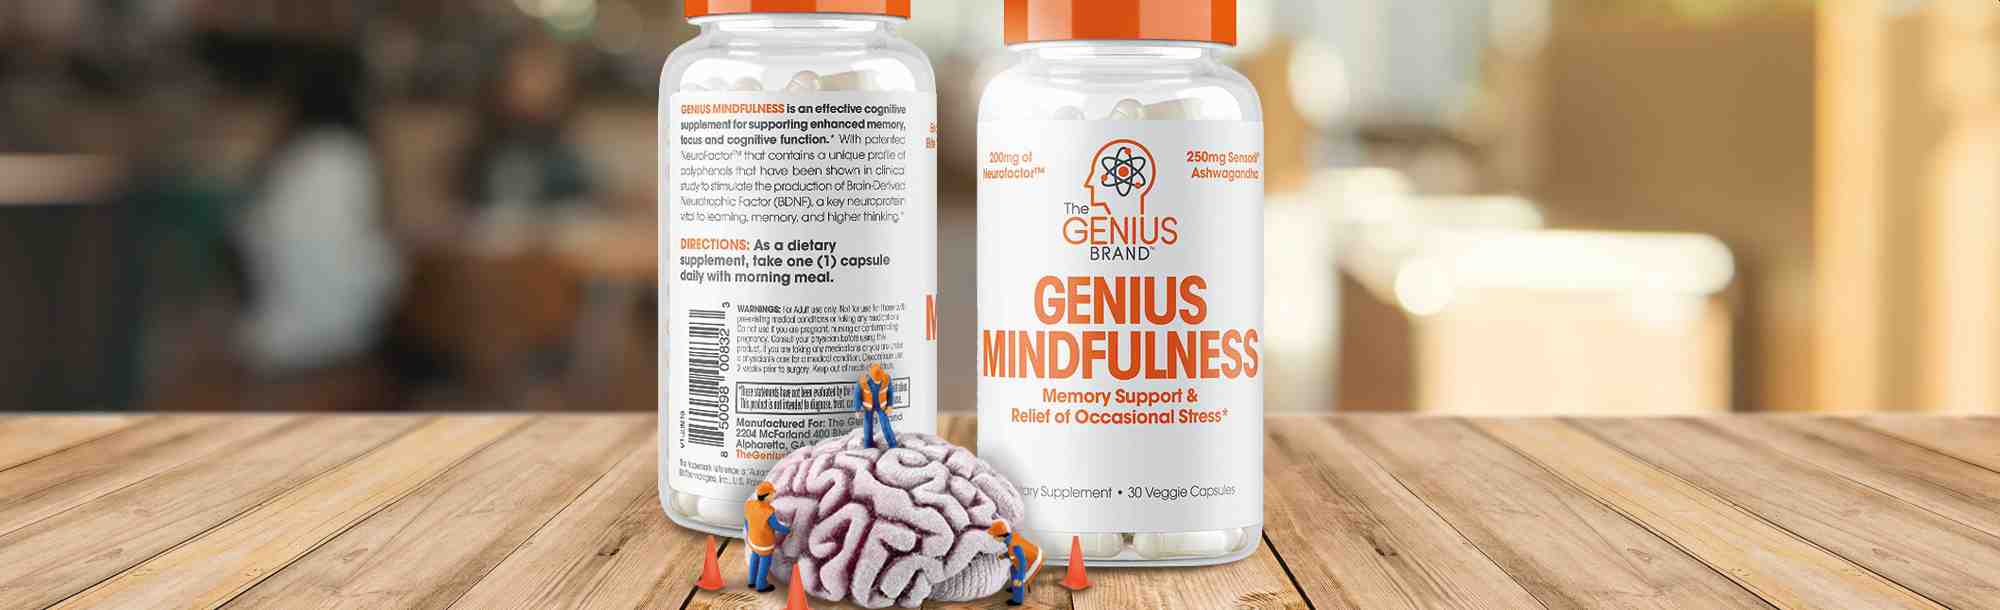 Genius Mindfulness Review